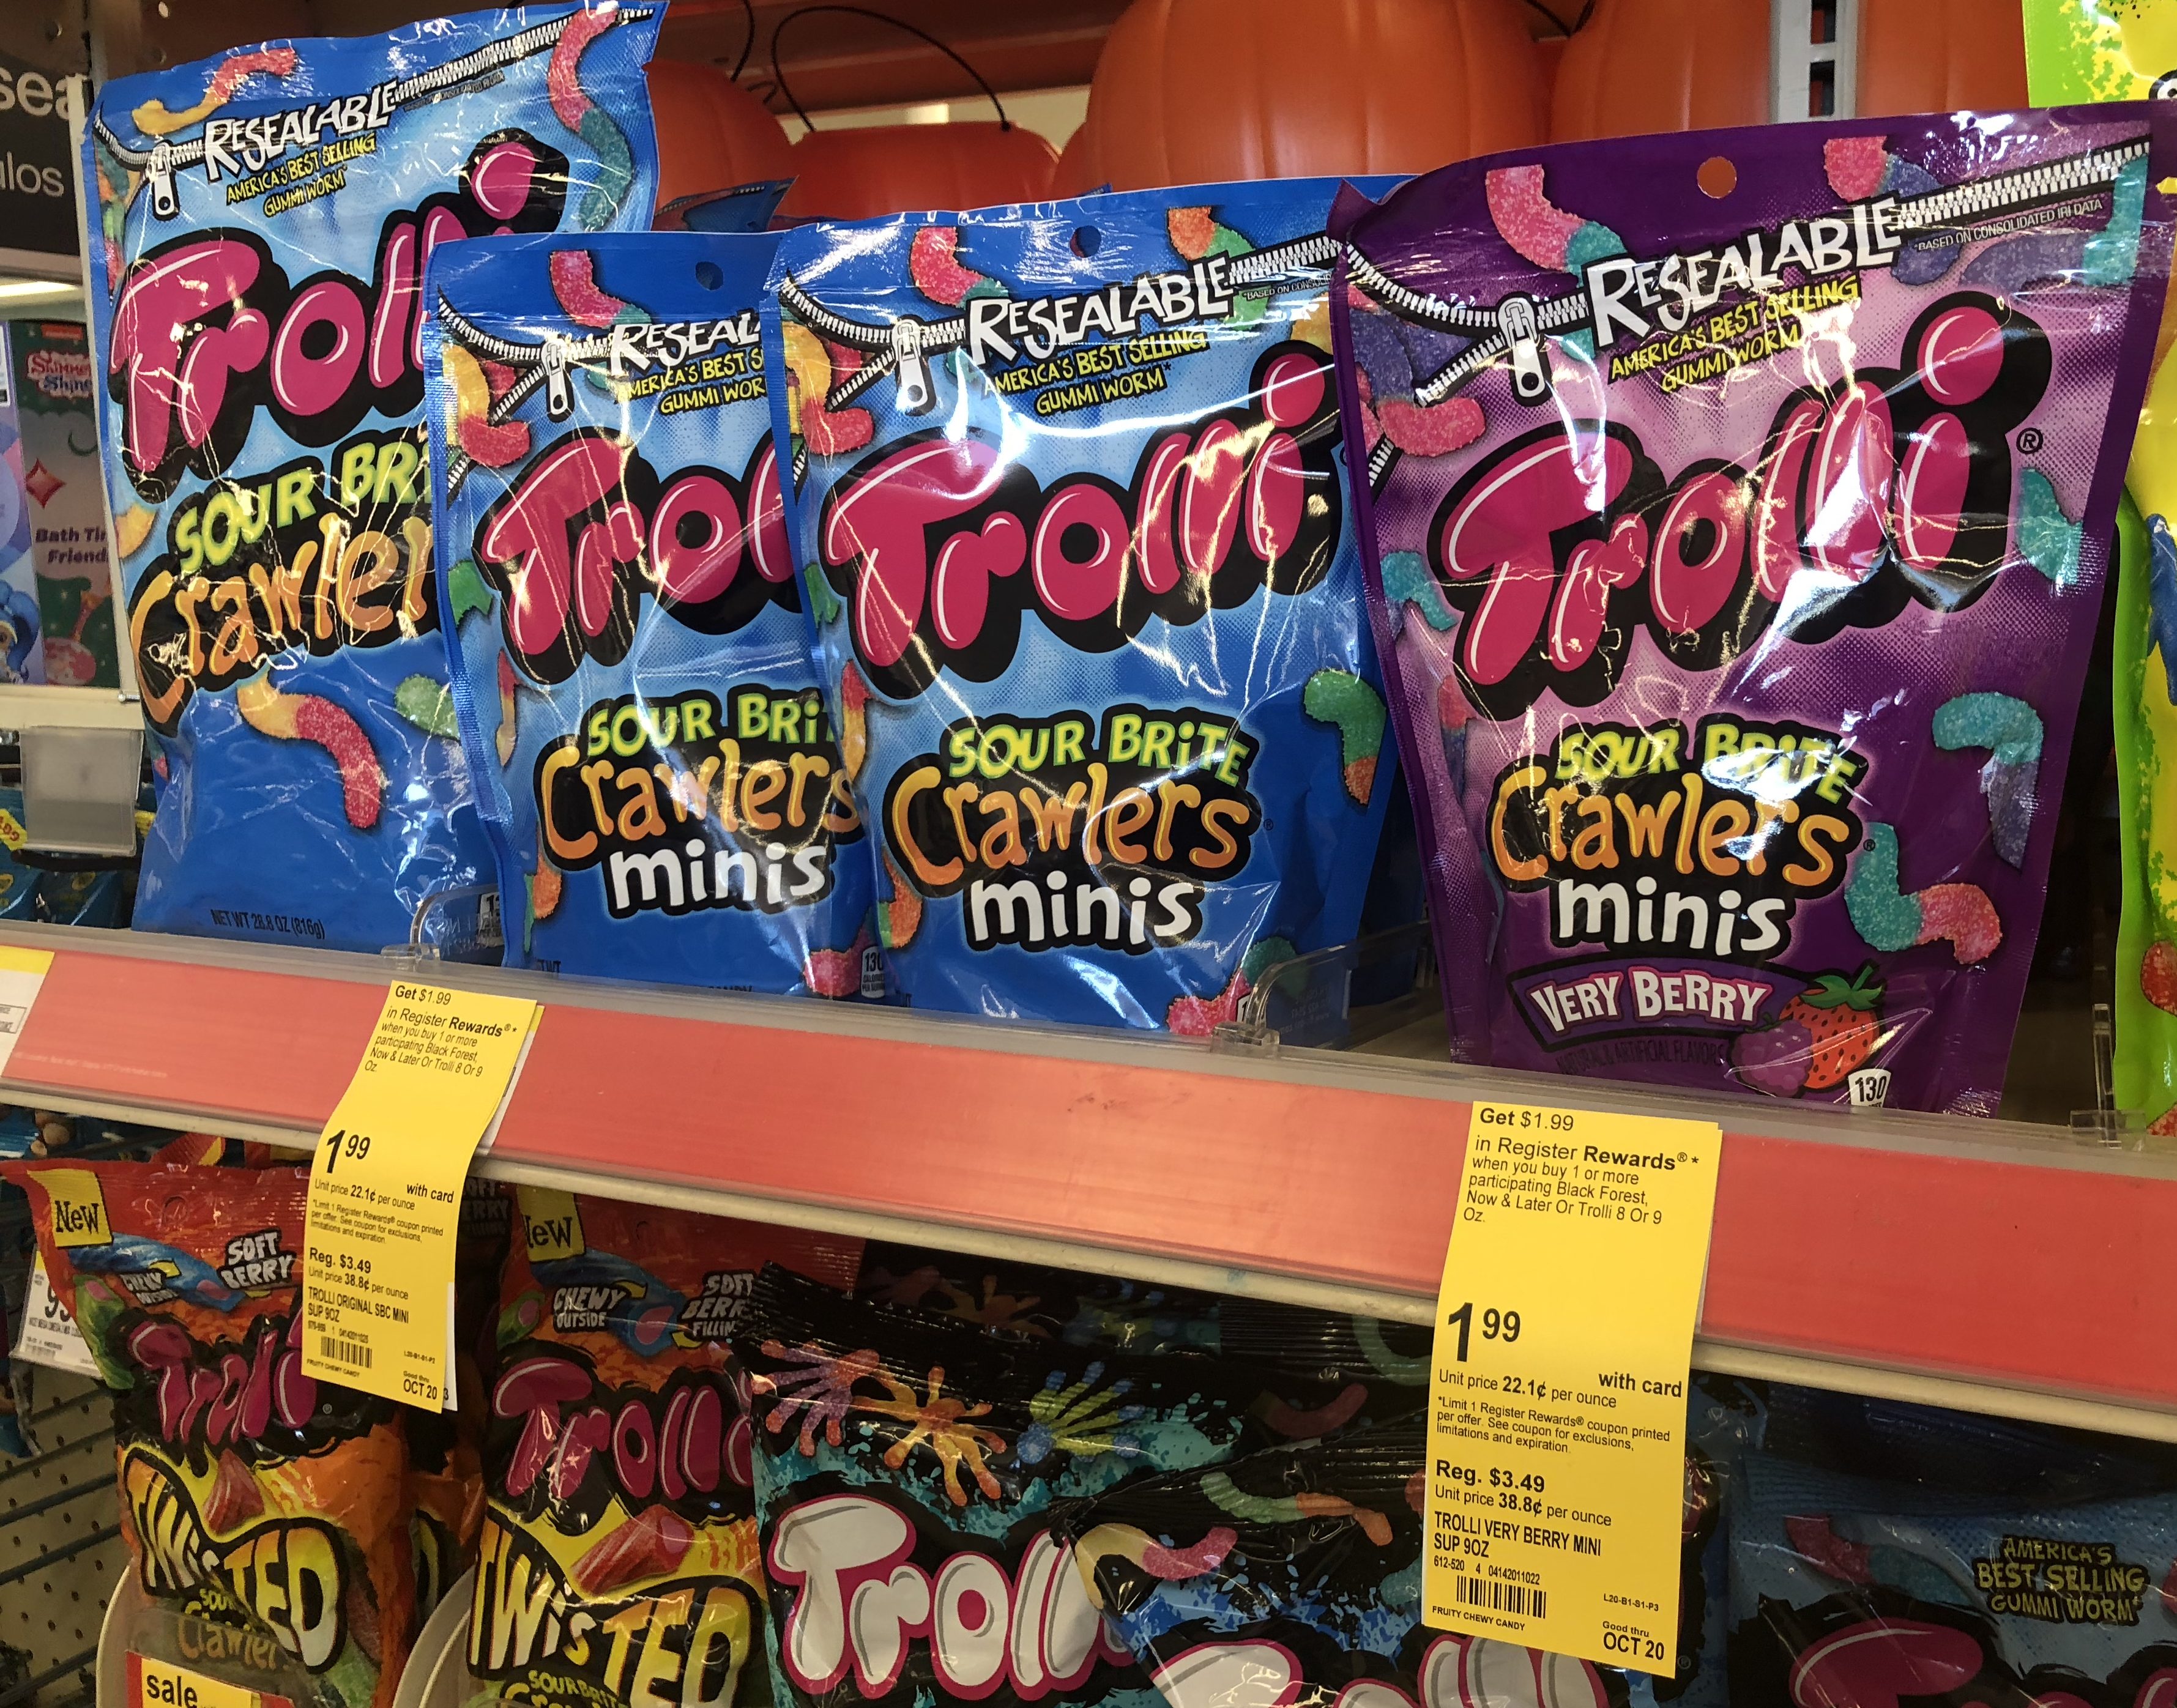 target & walgreens deals, coupons, & freebies 10-17-2018 –Trolli Candy deal at Walgreens